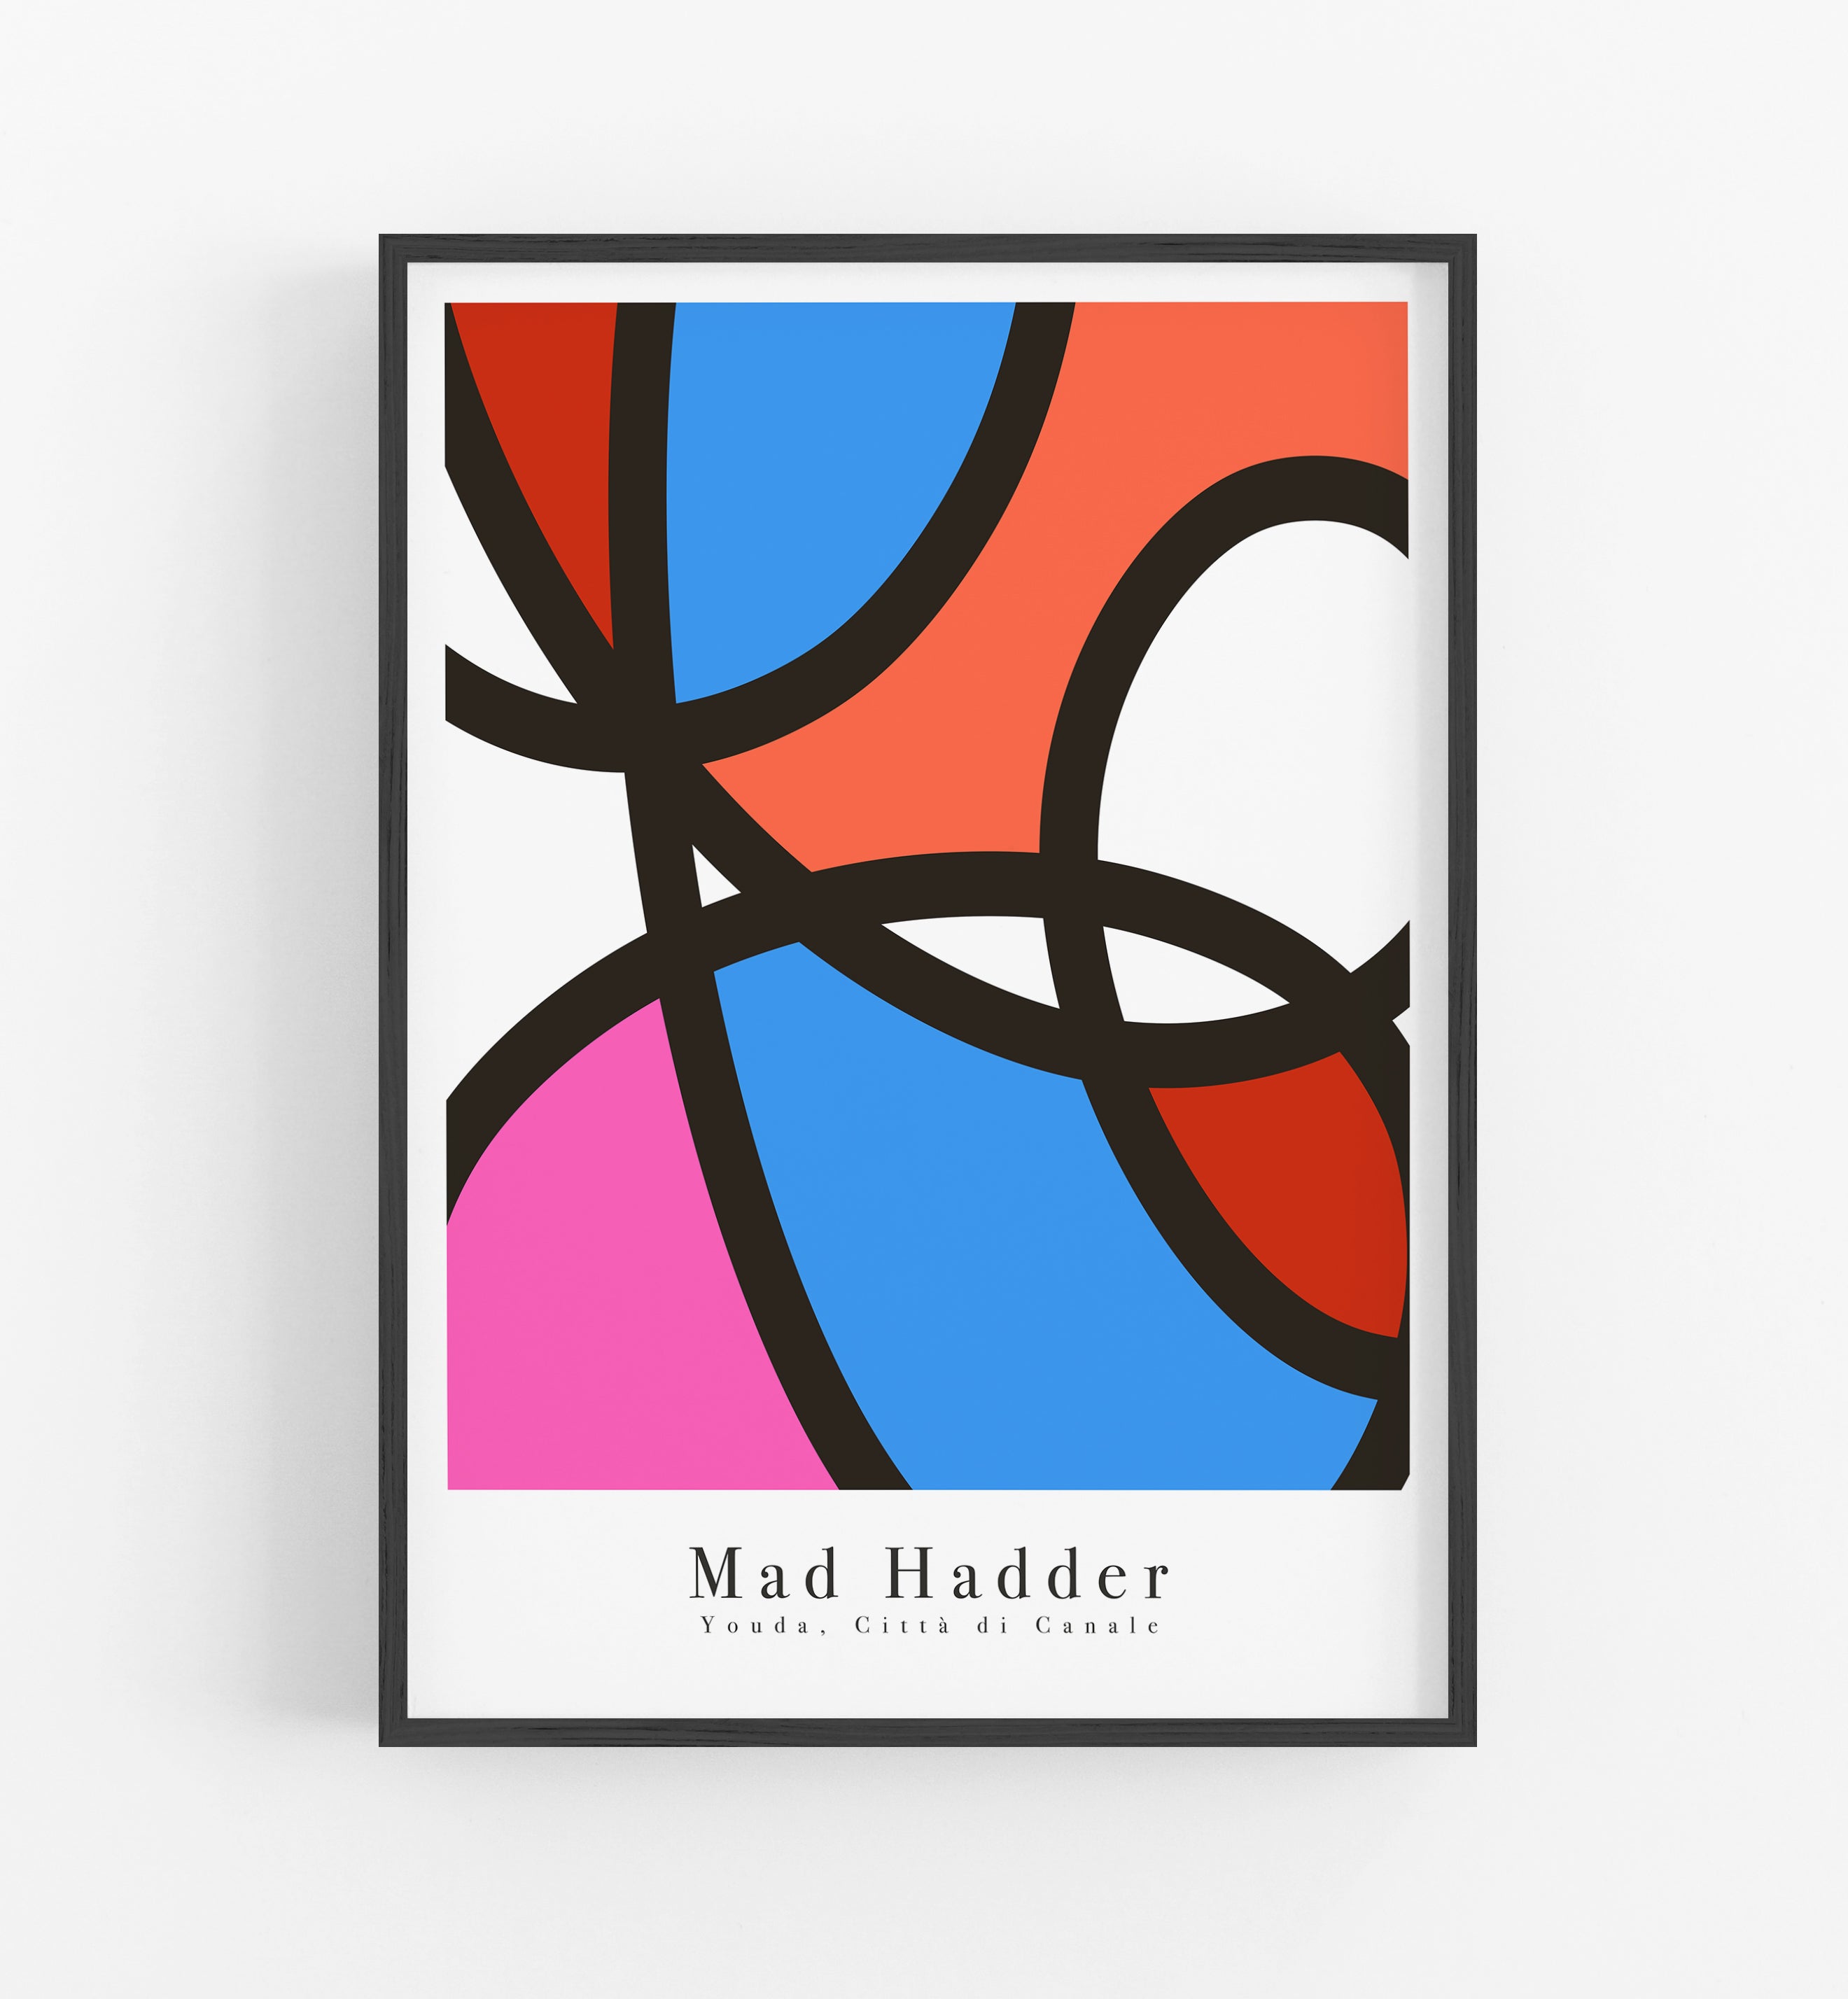 Mad Hadder